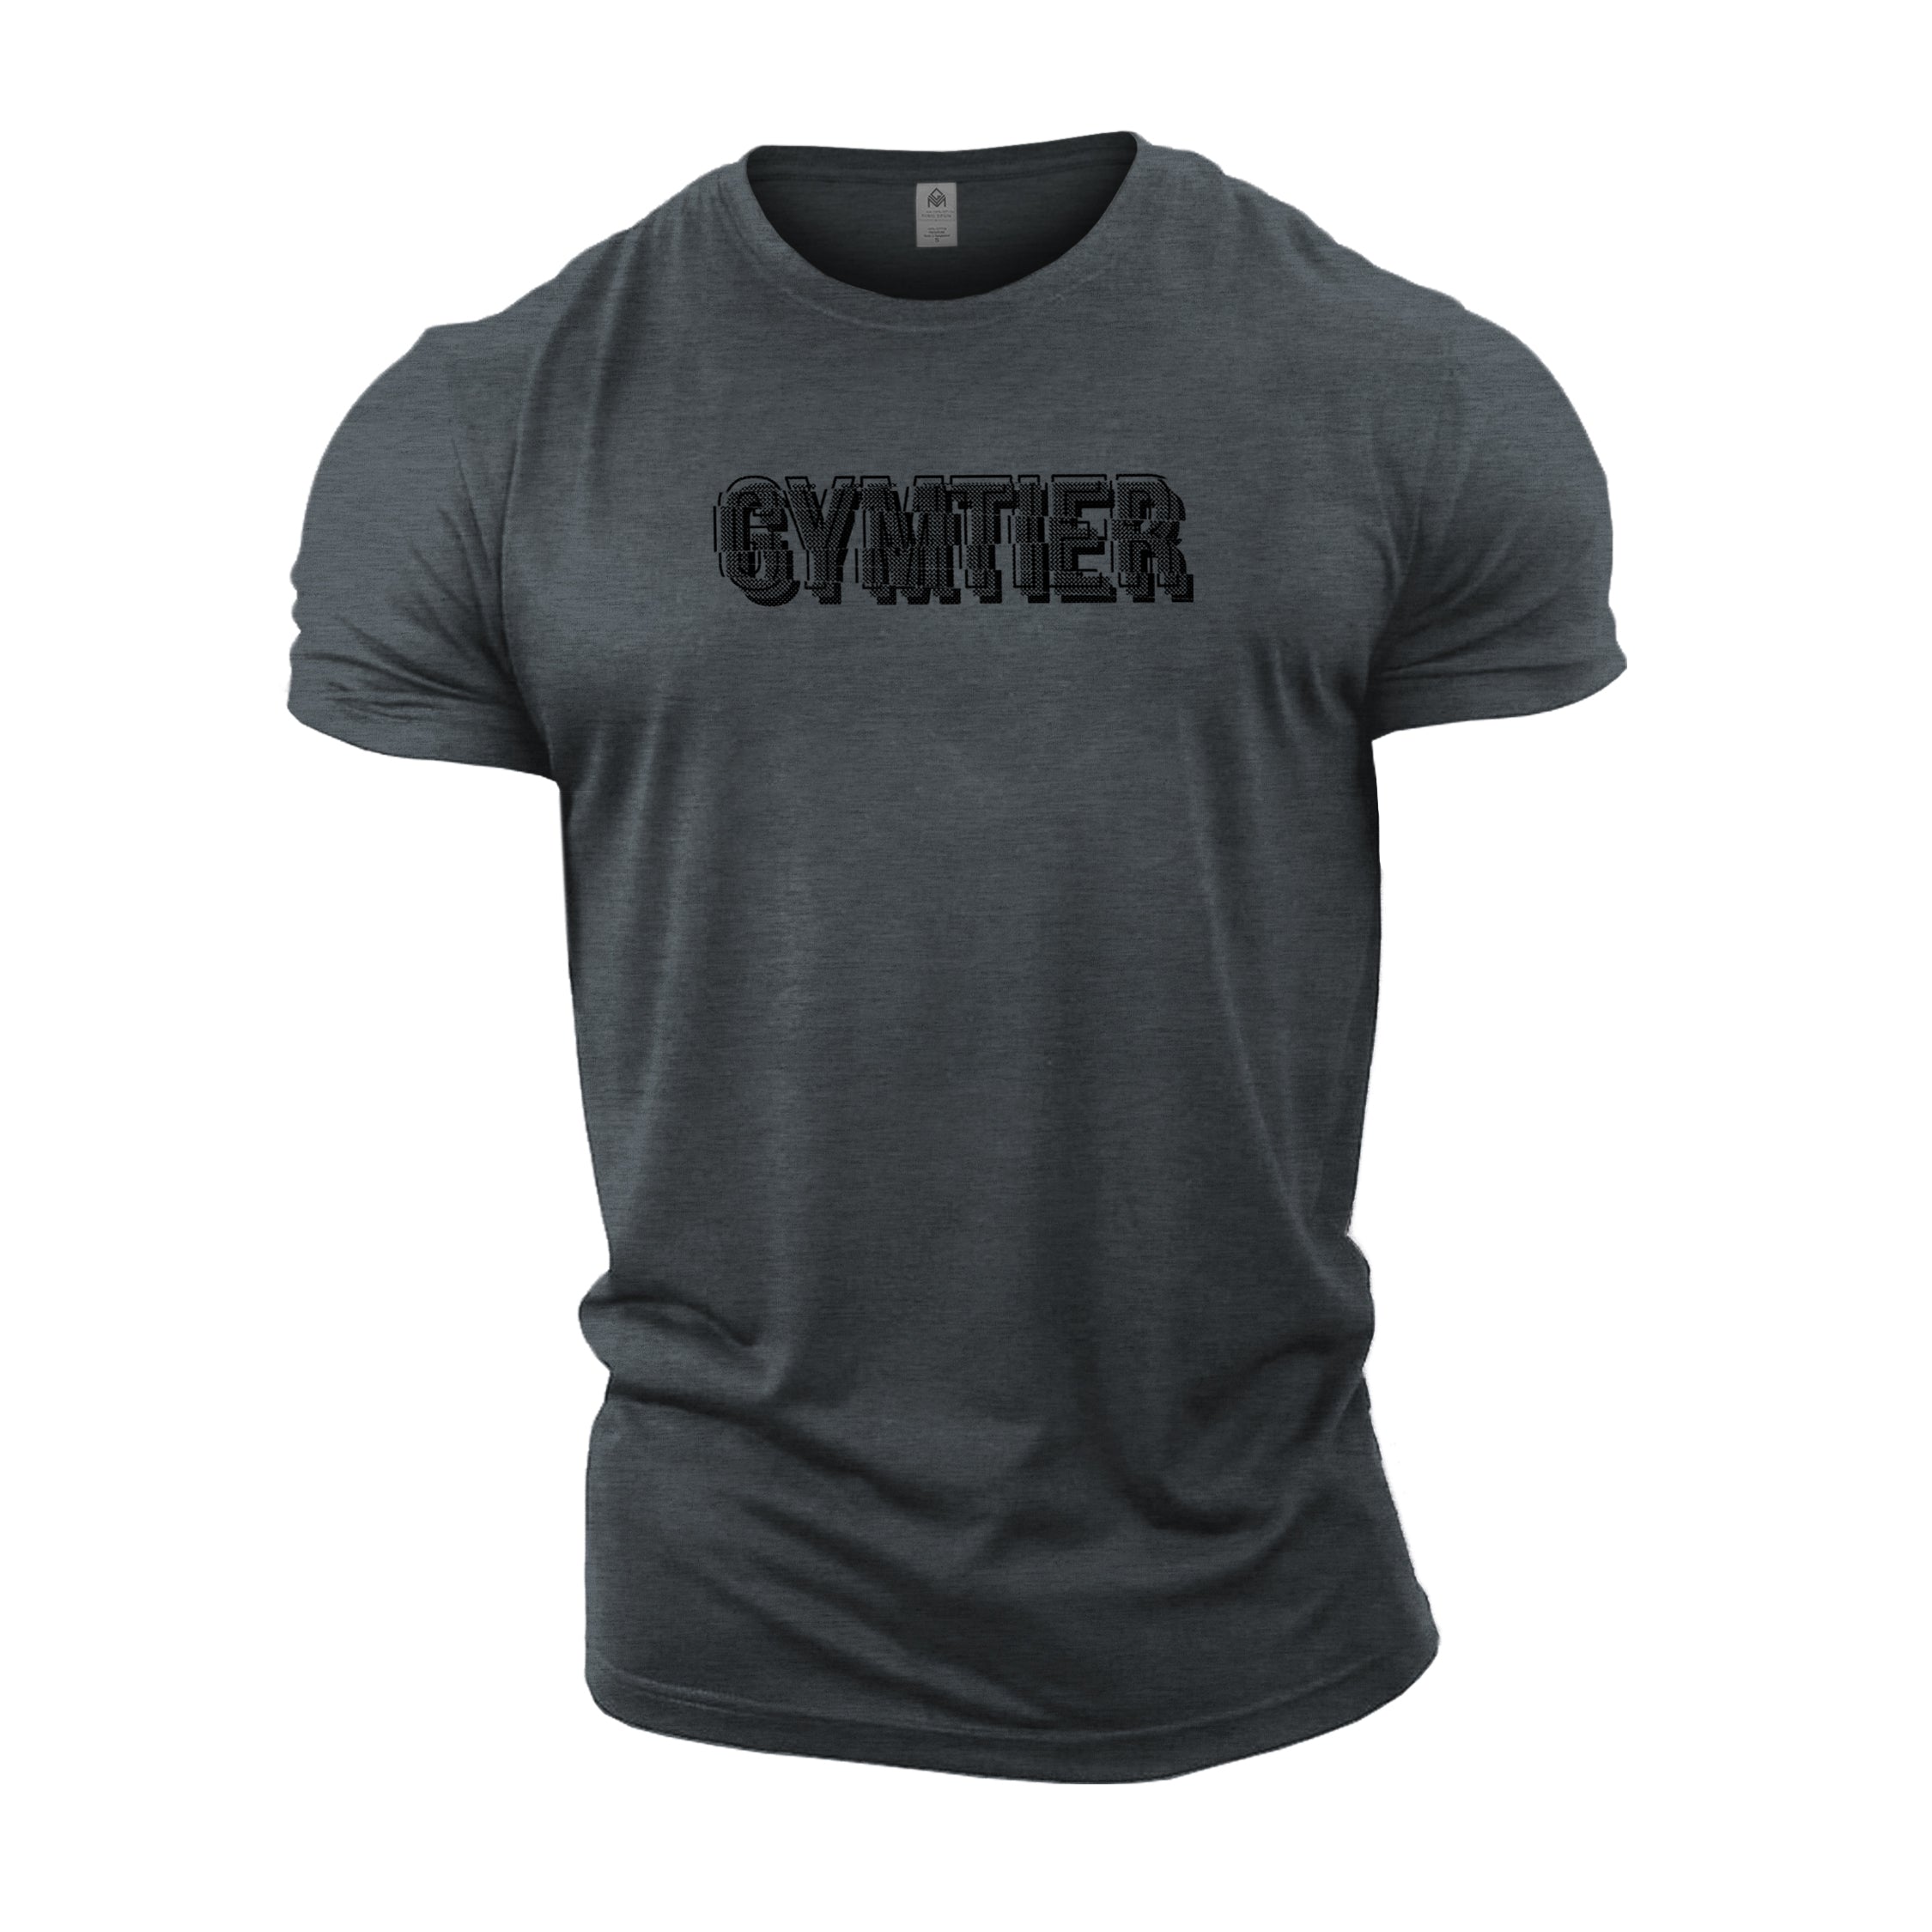 GYMTIER Shard - Gym T-Shirt